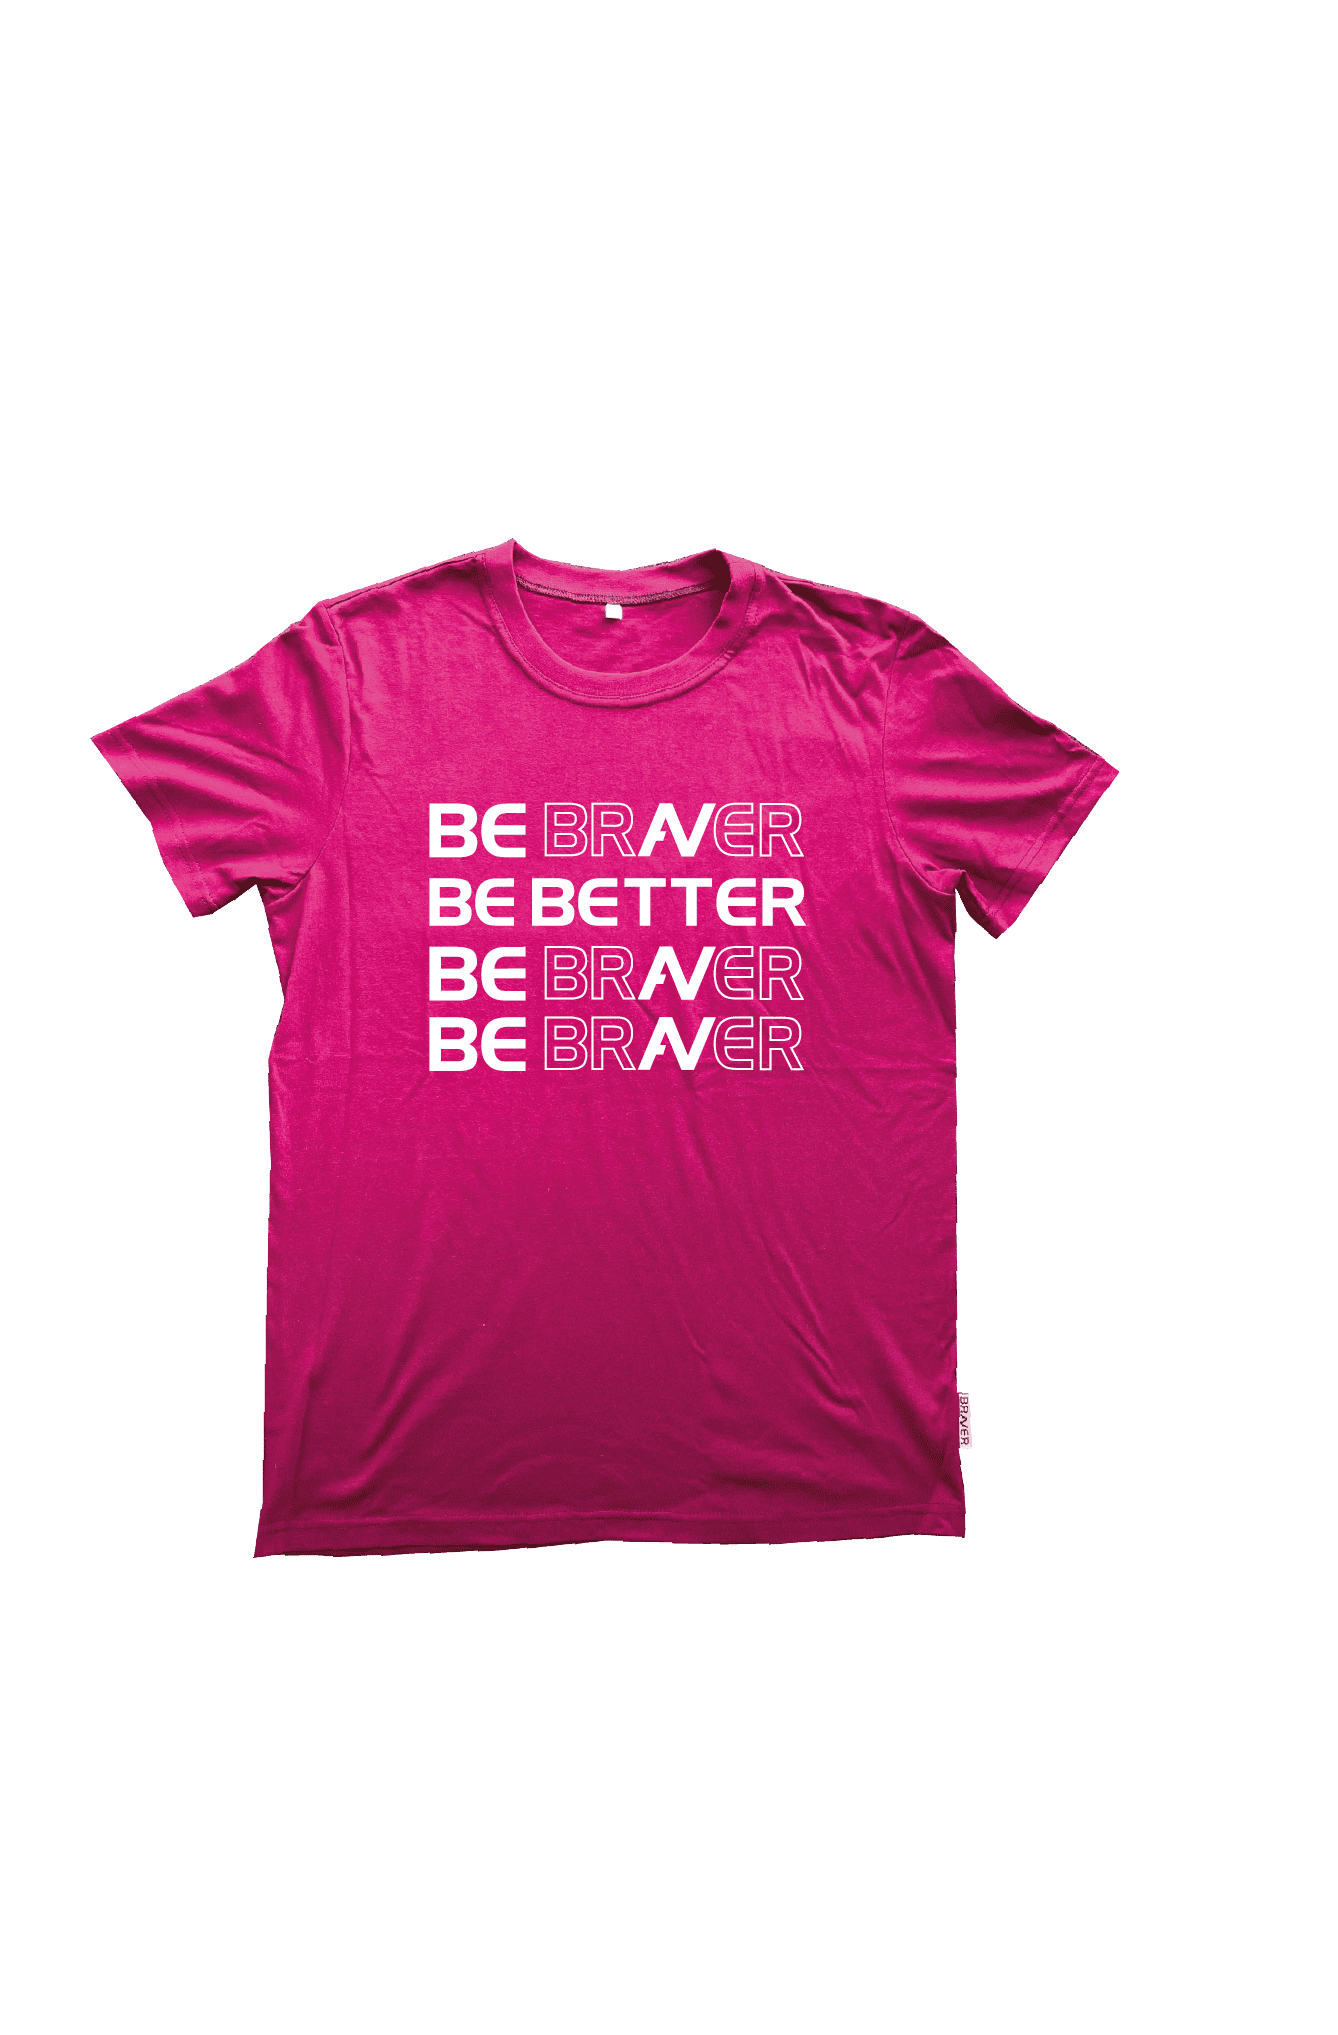 Be Better print on maroon t-shirt